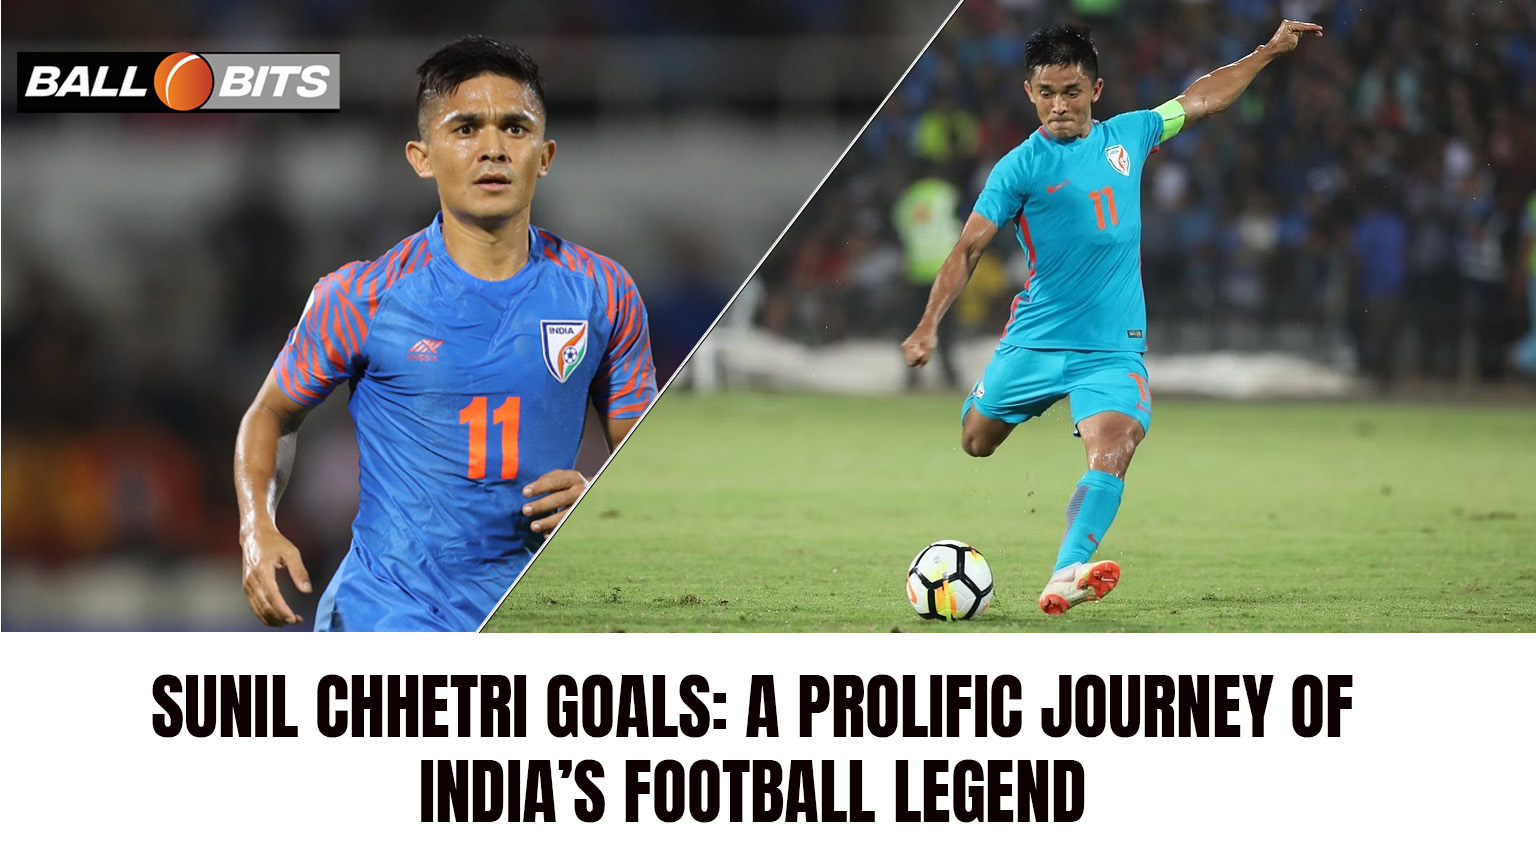 Sunil Chhetri Goals: A Prolific Journey of India's Football Legend